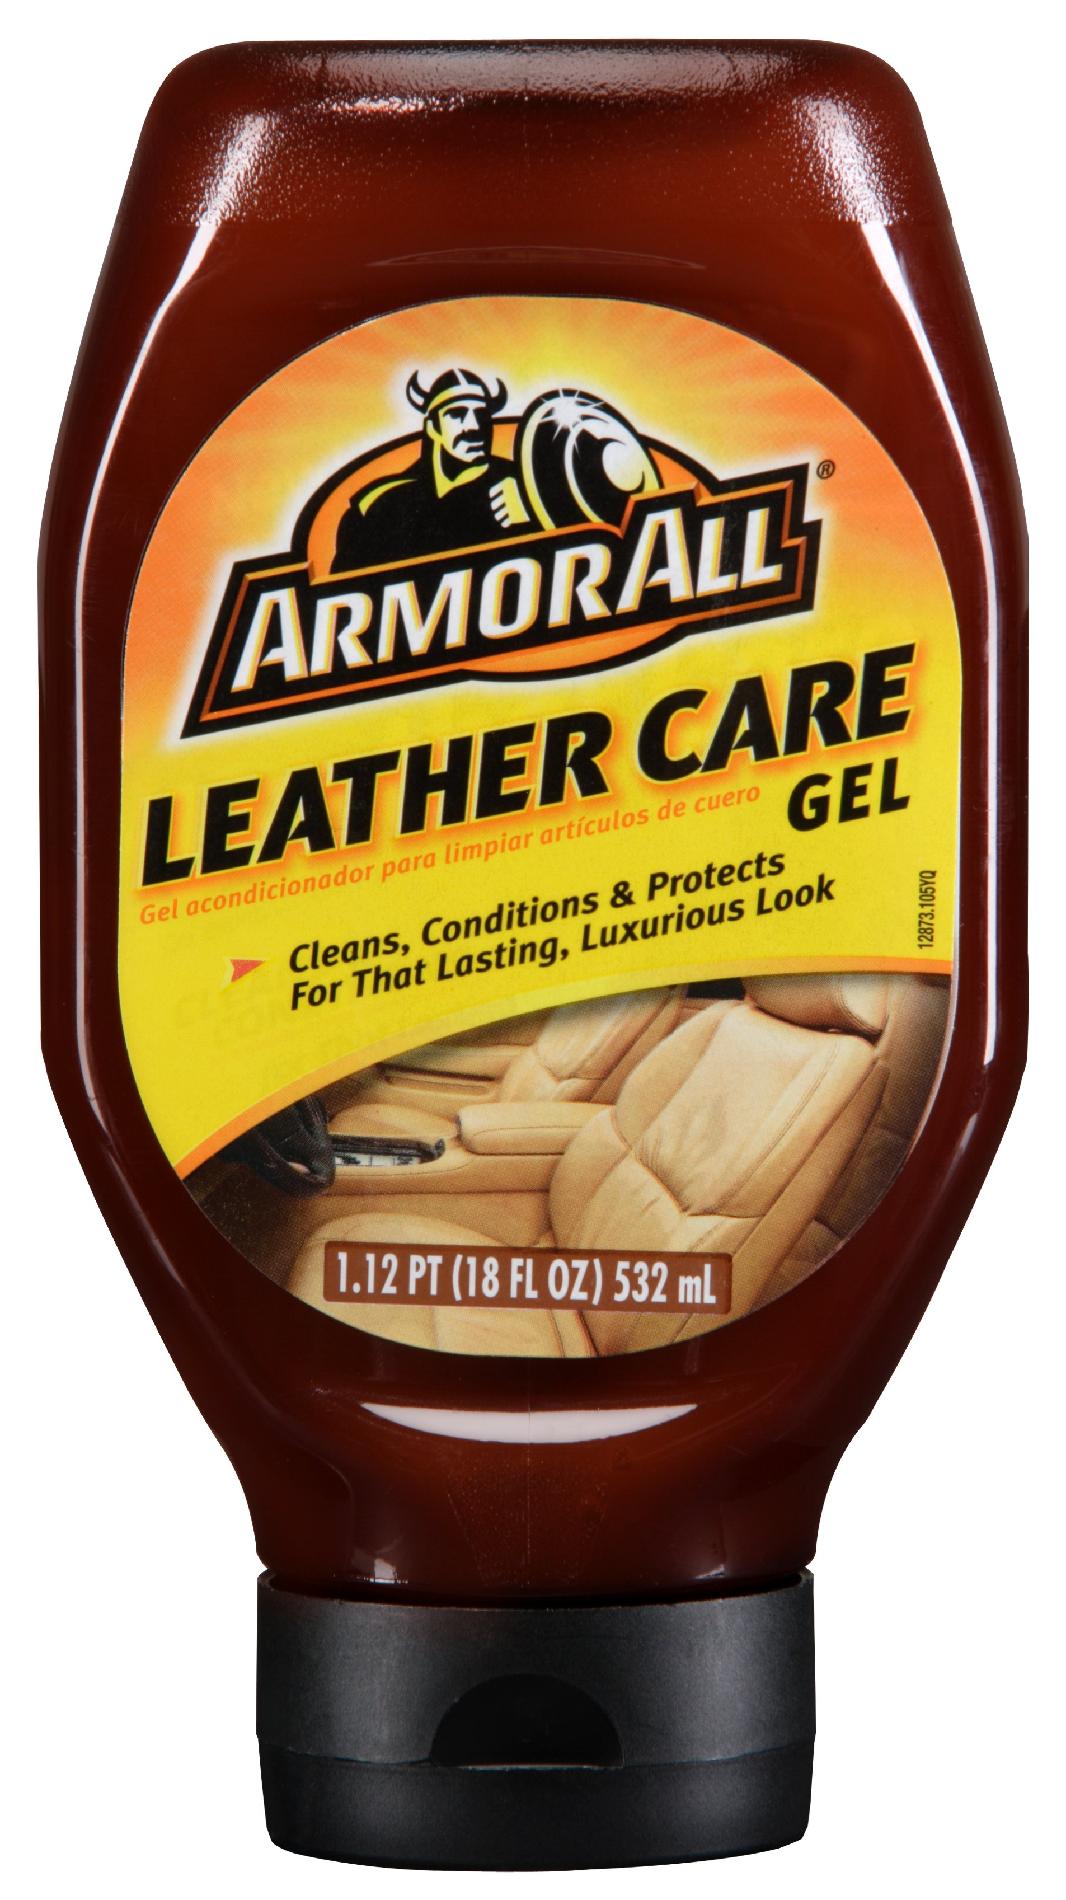 Armor All Leather Care Gel 18 oz.